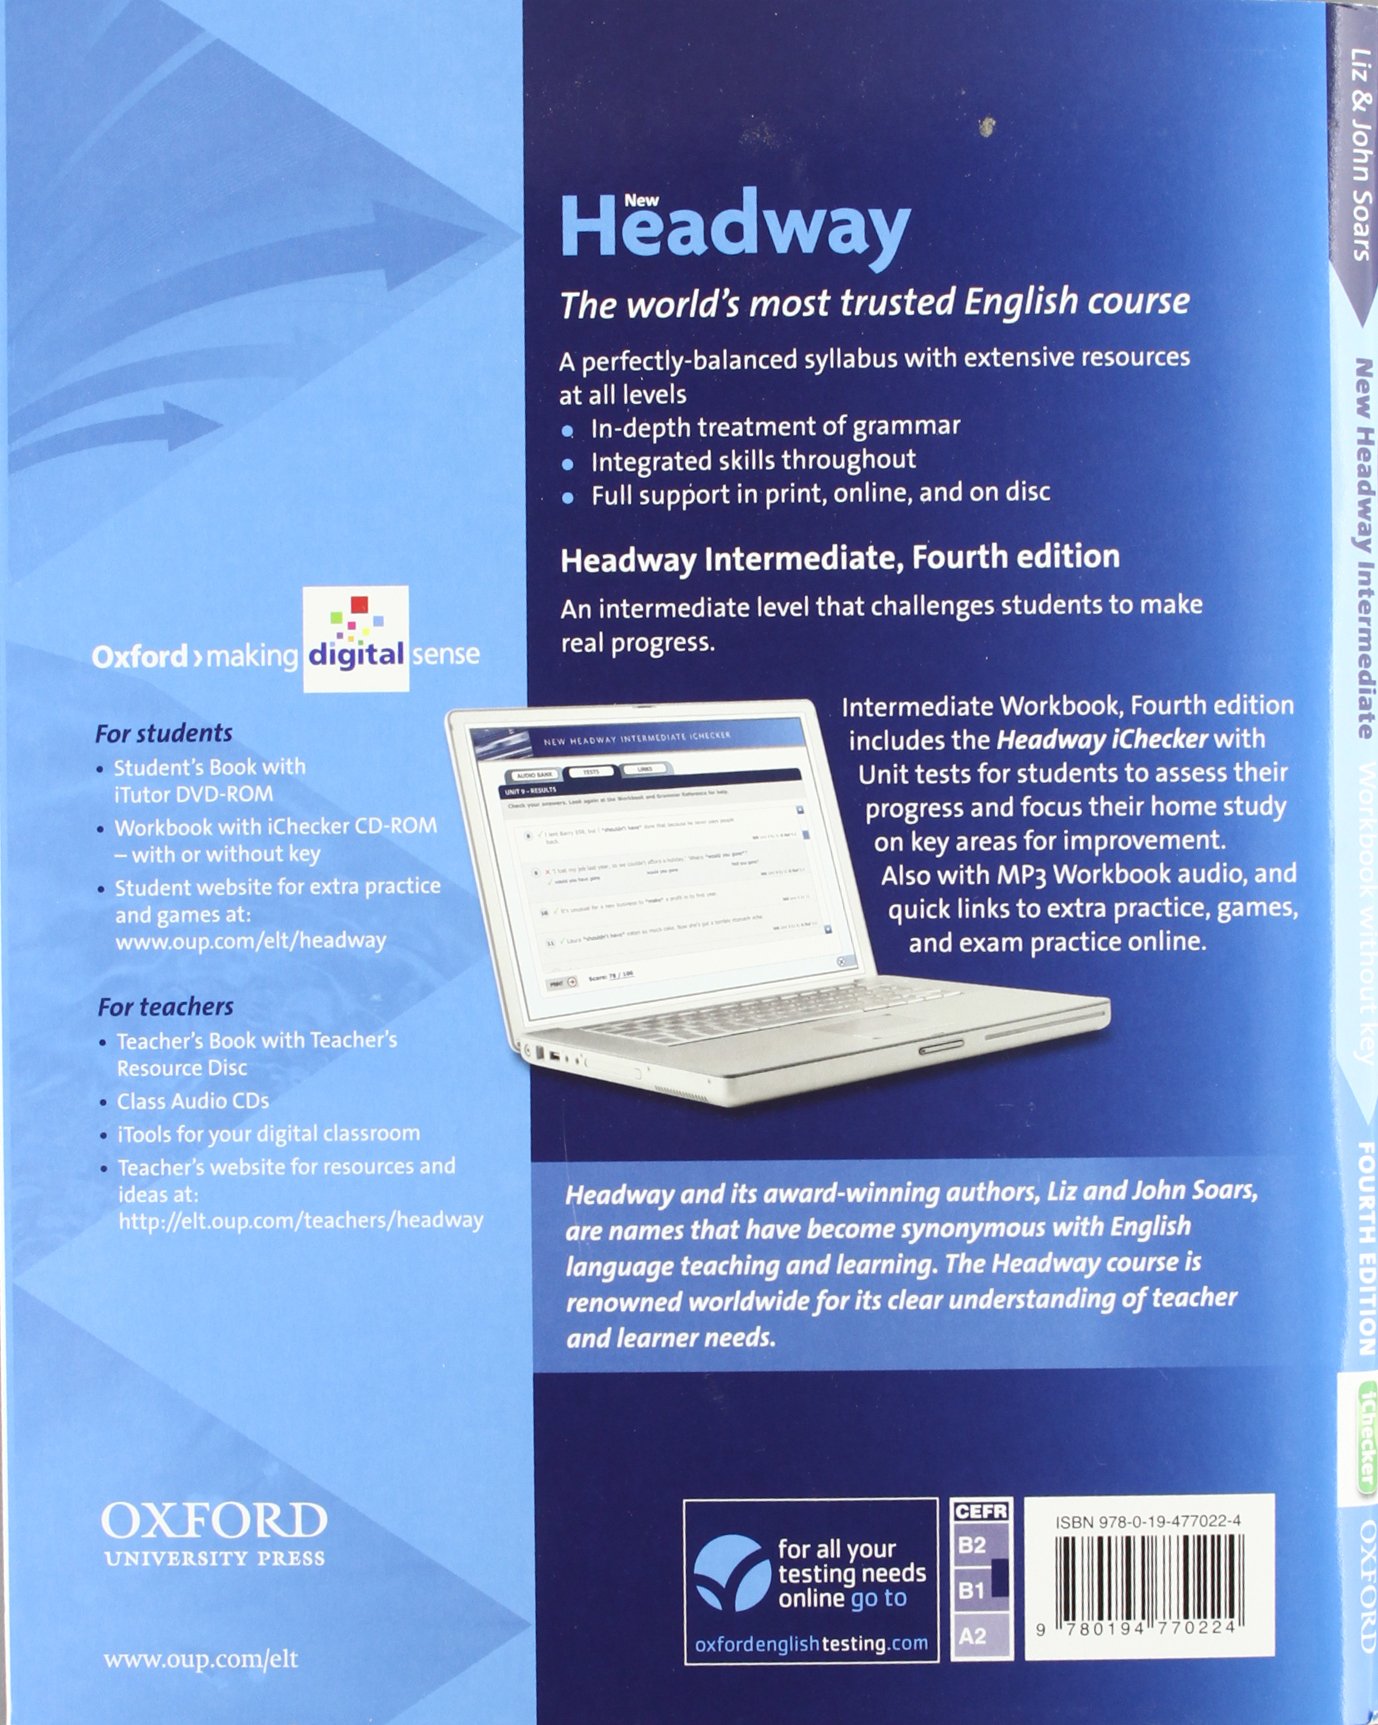 New Beginner Headway Workbook 4 Edition. New Headway pre-Intermediate 4th Edition Workbook. Headway Workbook Intermediate with Key. New Headway Intermediate 4th Edition.